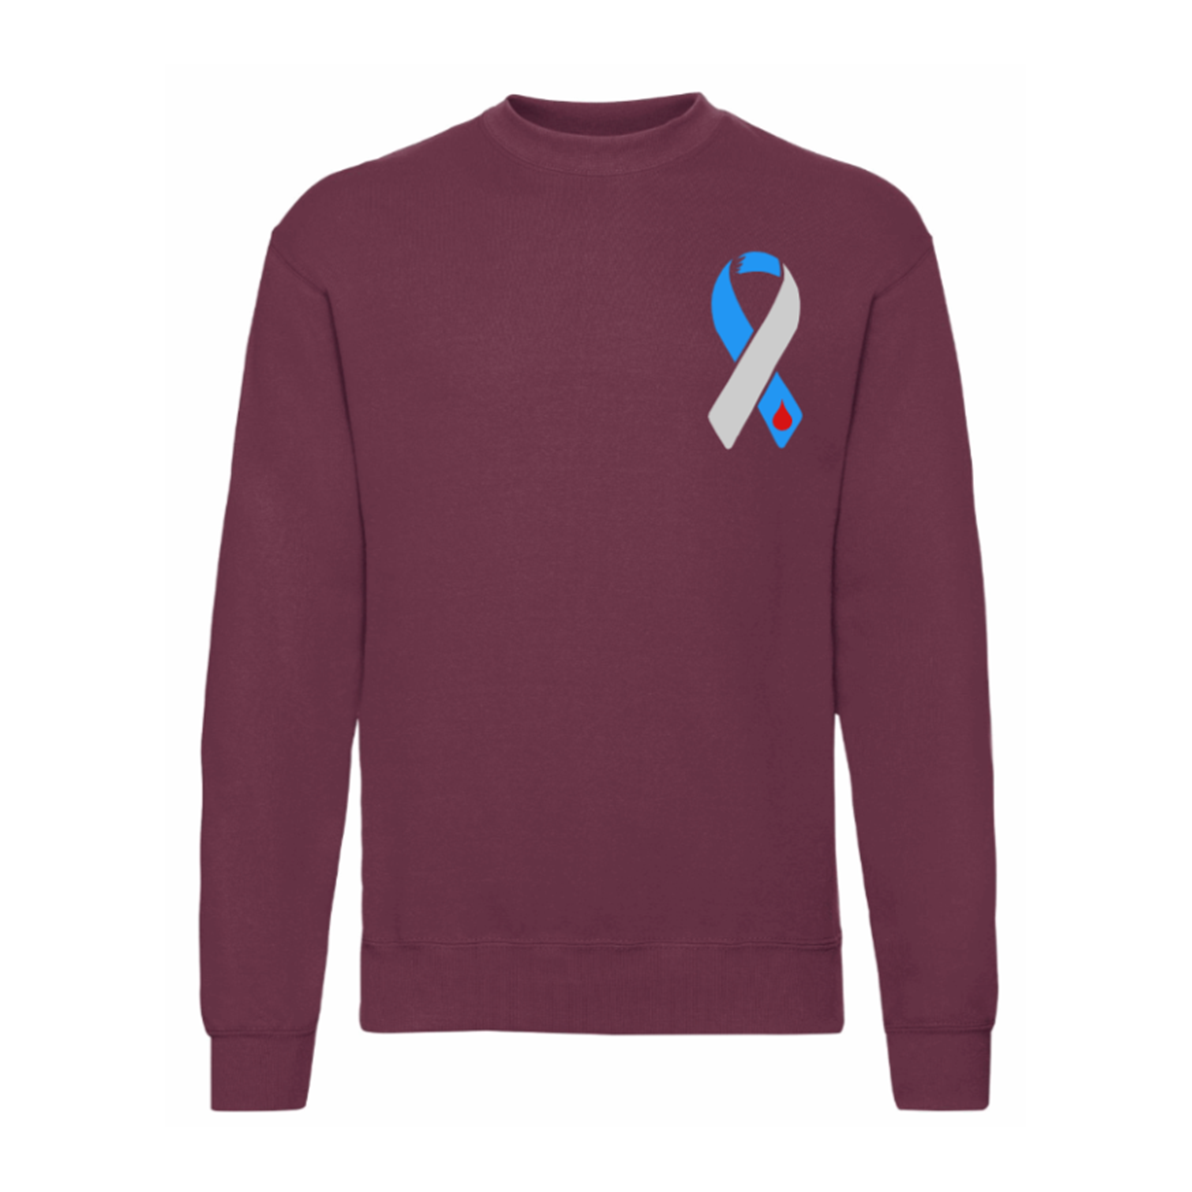 Awareness Ribbon Sweatshirt